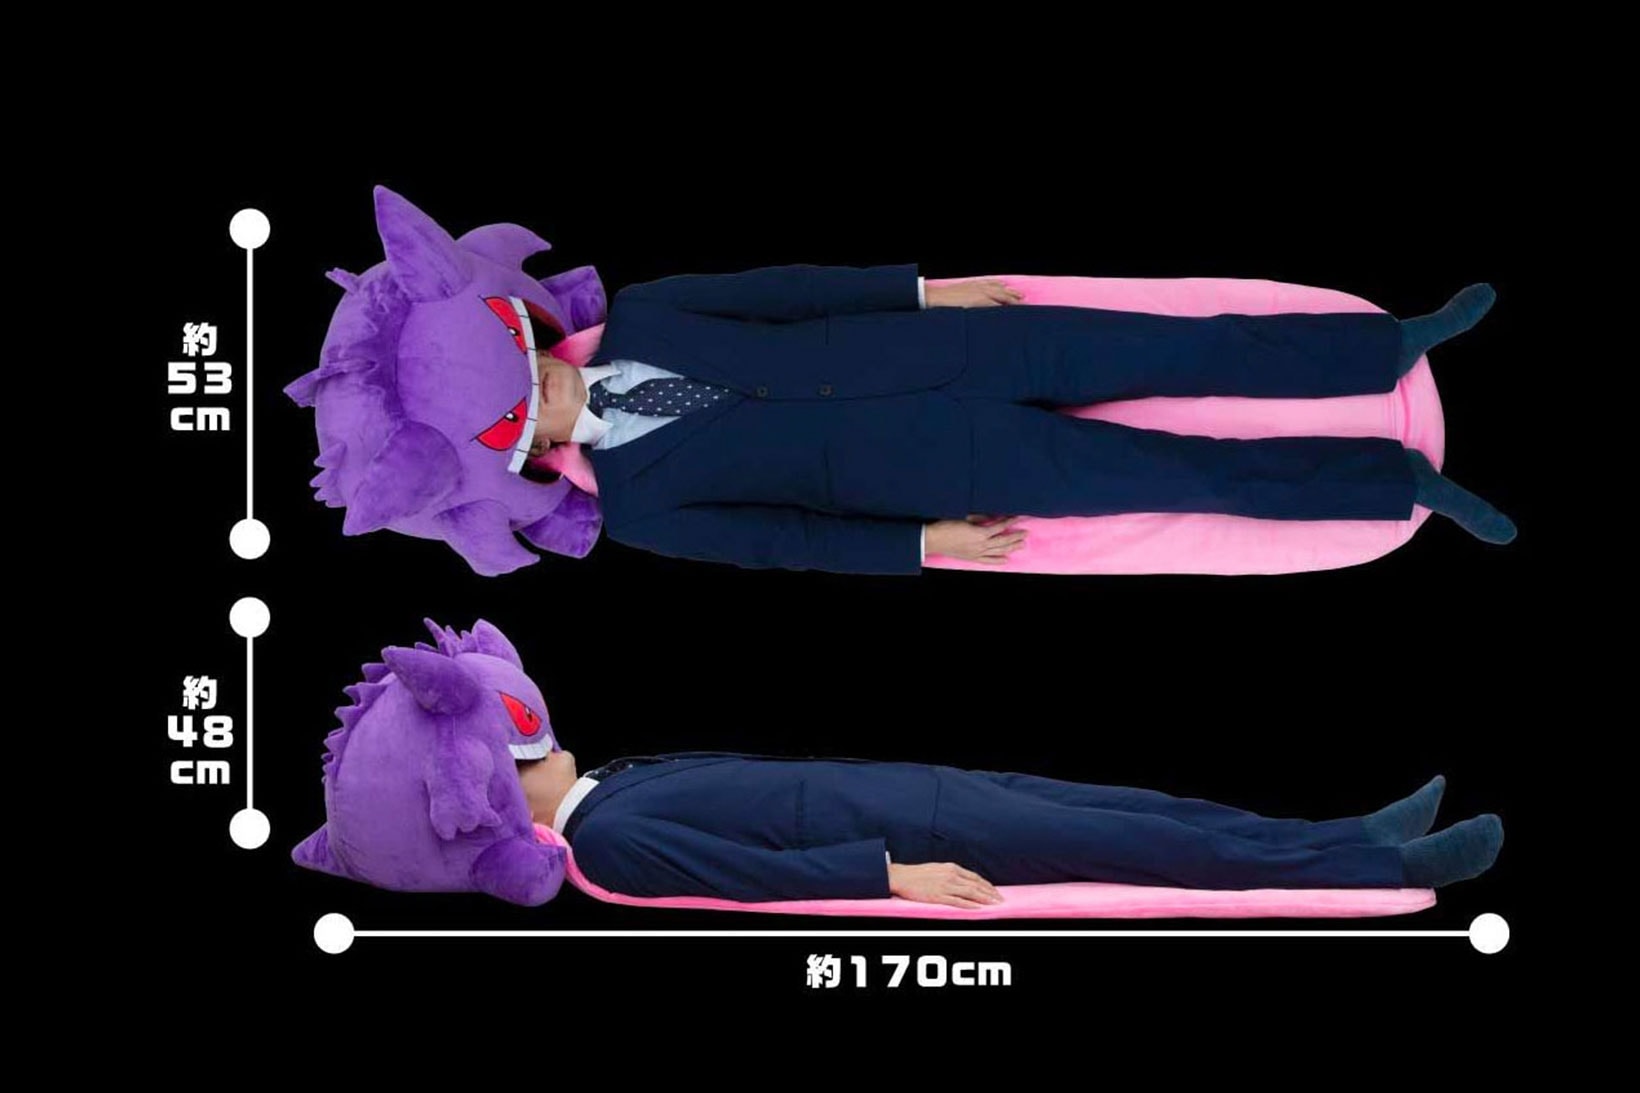 pokemon gengar mouth licking plush pillow homeware premium bandai purple pink size measurements dimensions